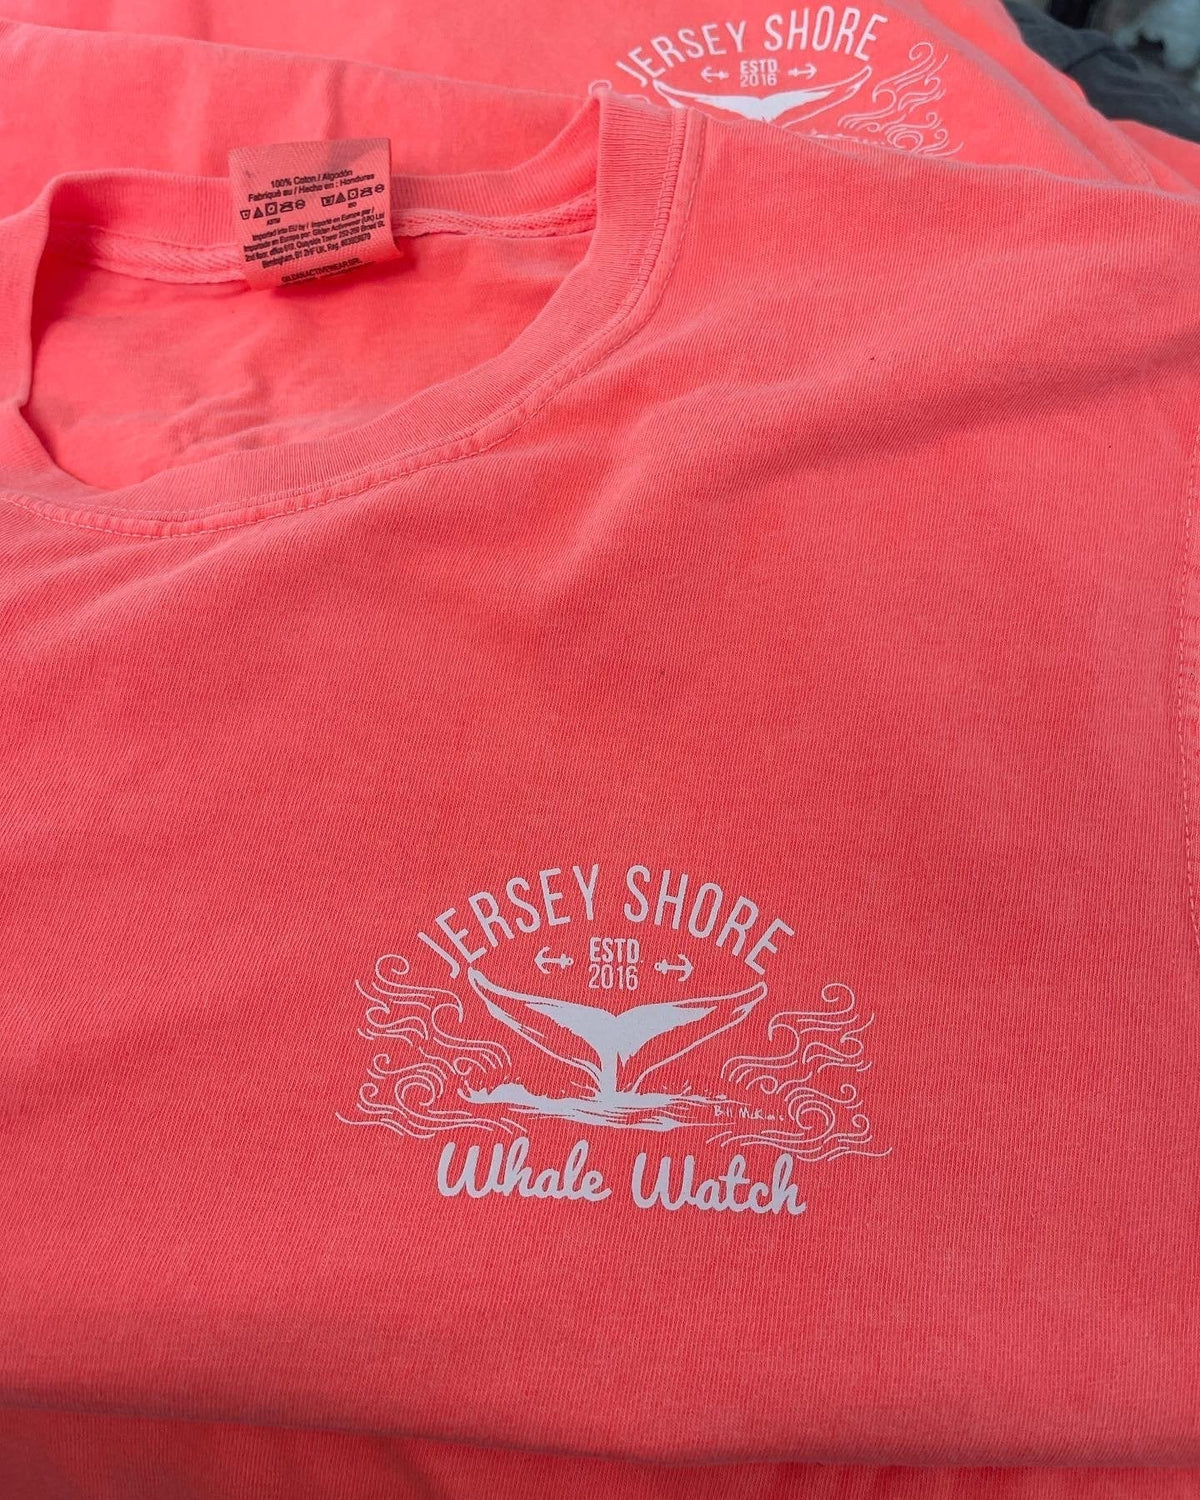 Jersey Shore Whale Watch Tshirt Amazing Quality Preshrunk Bill McKim Photography Small Neon Coral 